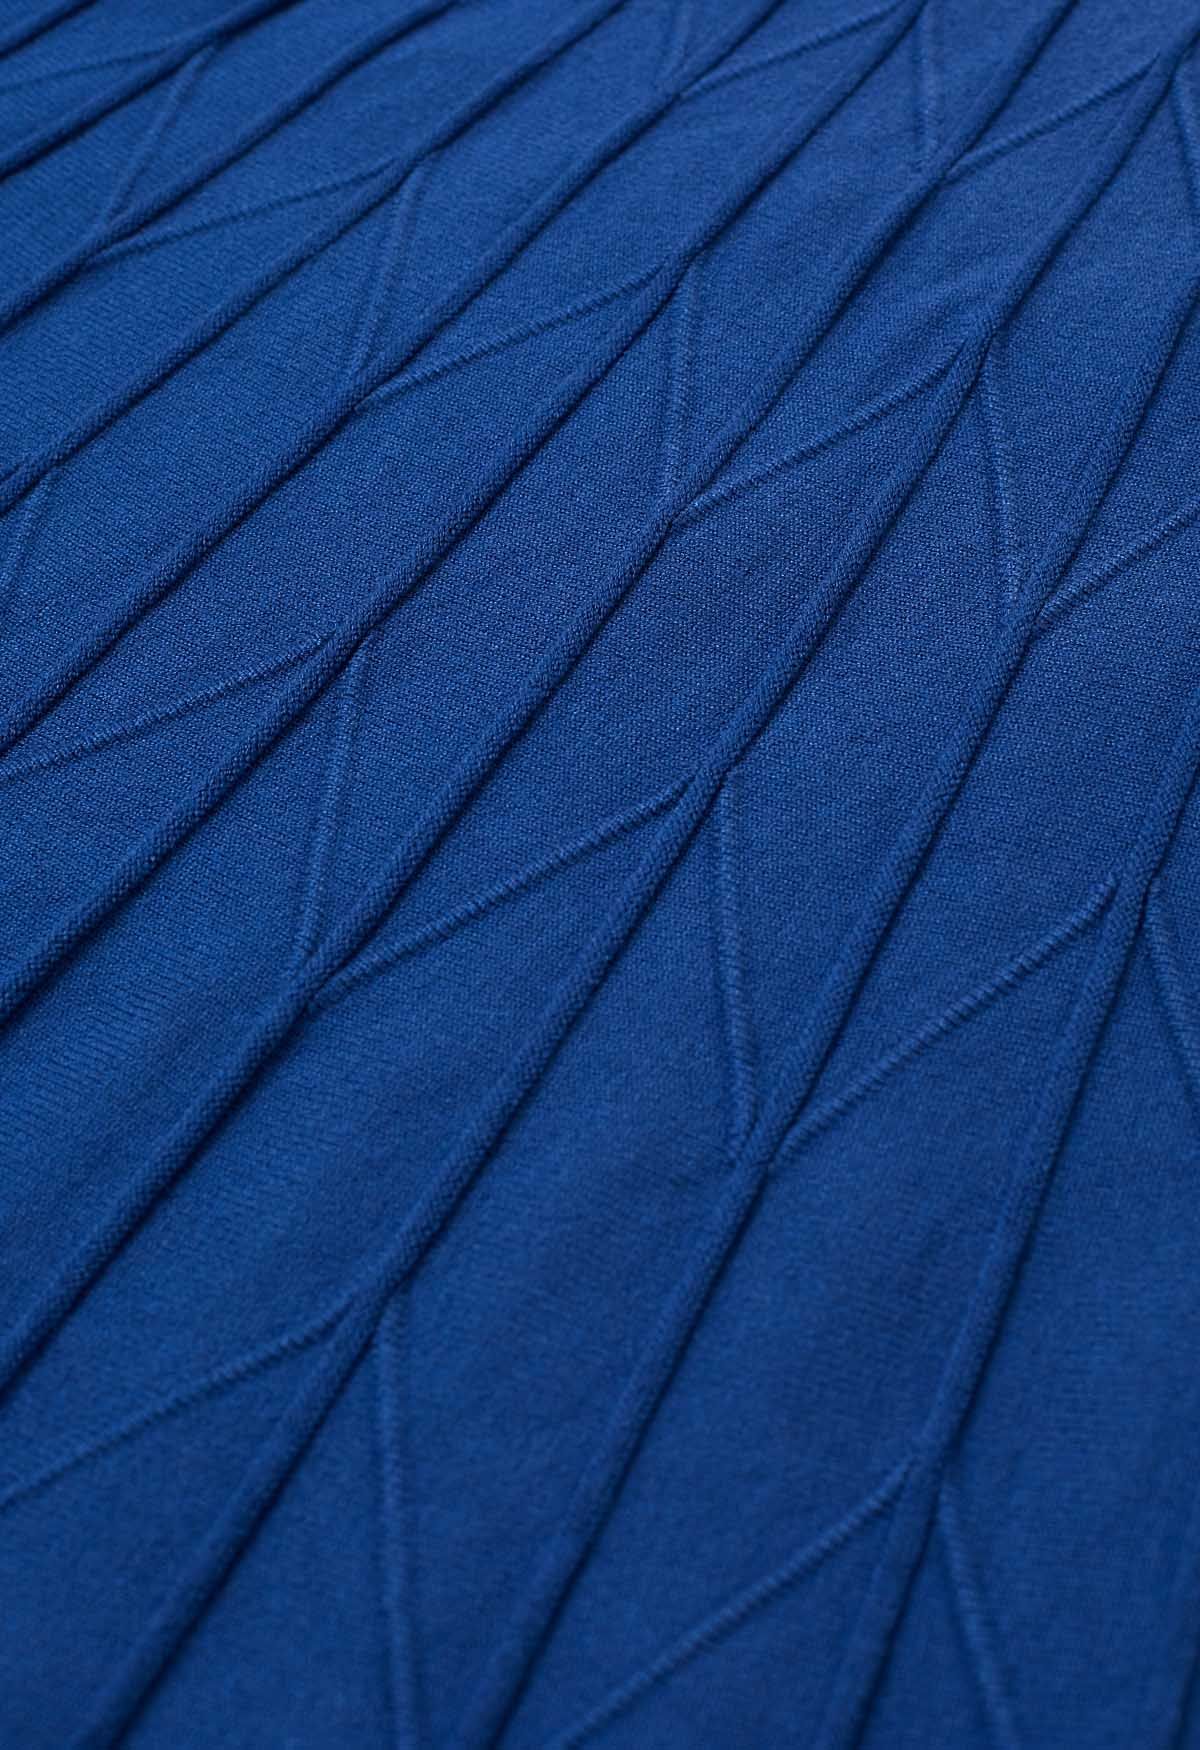 Zigzag Pleated Knit Skirt in Indigo